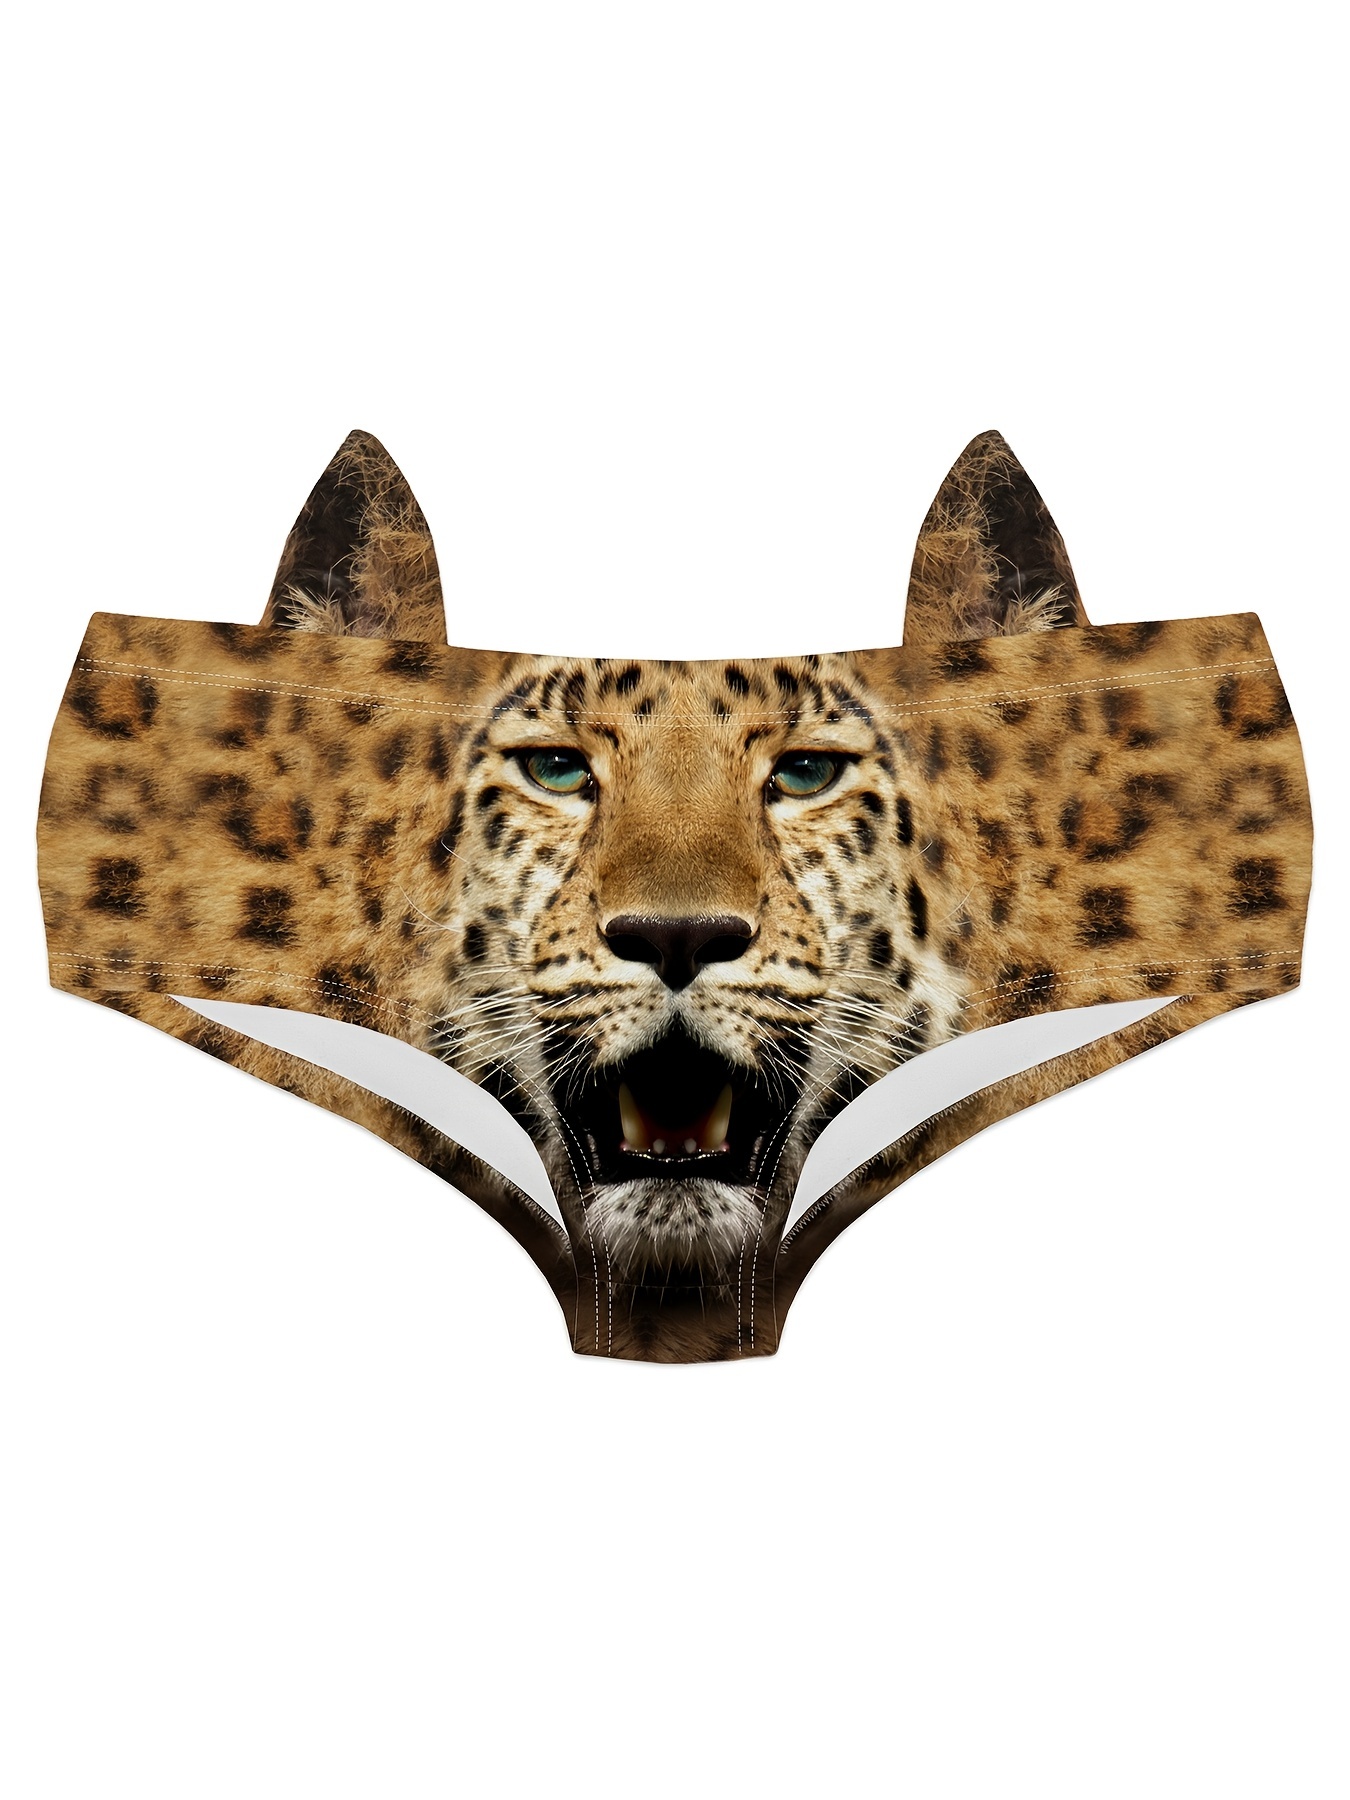 Leopard 3D Printed Animal Ear Briefs Sexy Comfort Elastic Novelty Intimates Panties Women's Lingerie Underwear